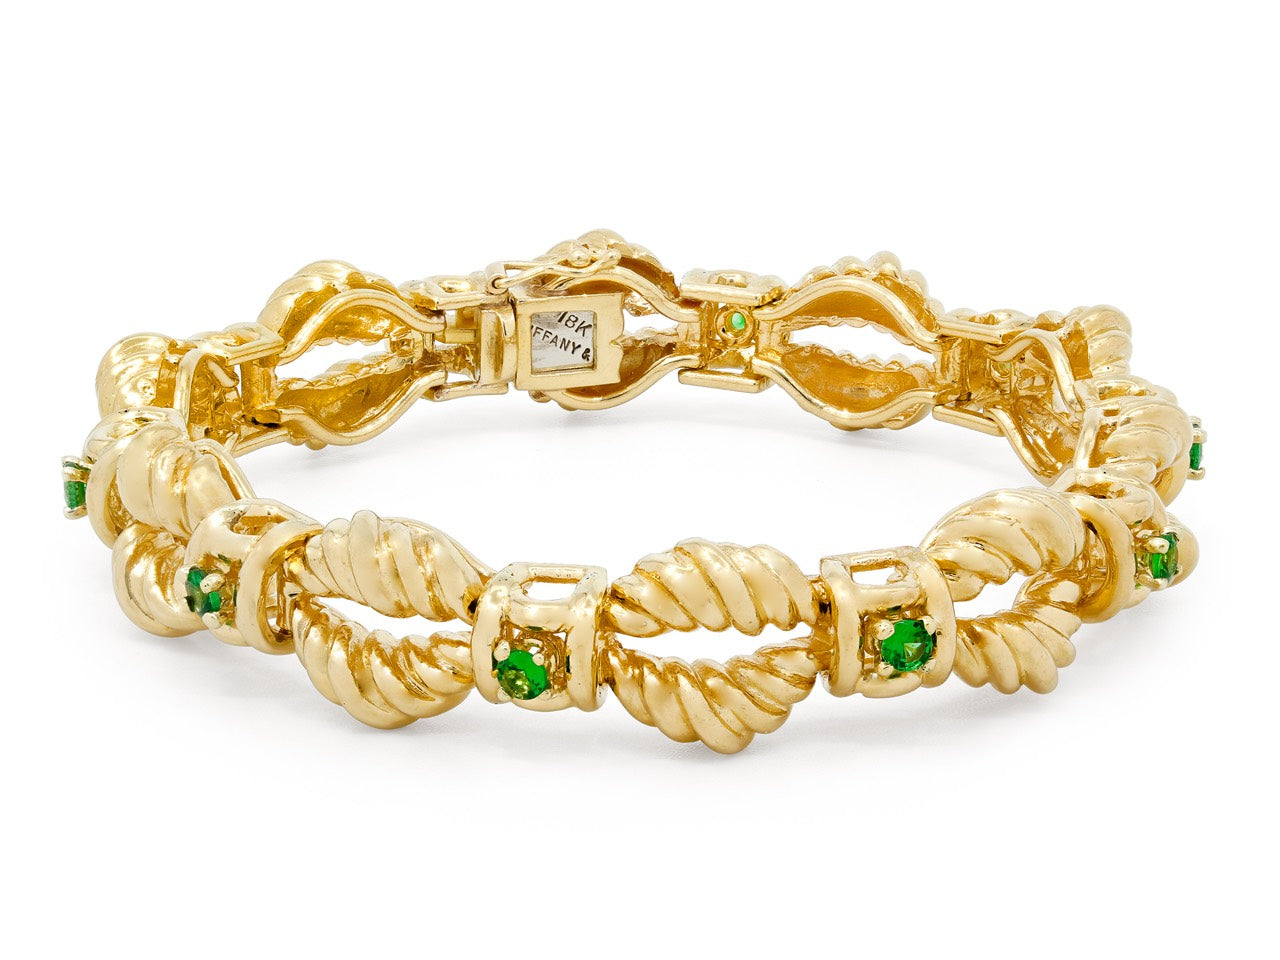 Green Garnet and Gold Bracelet, in 18K